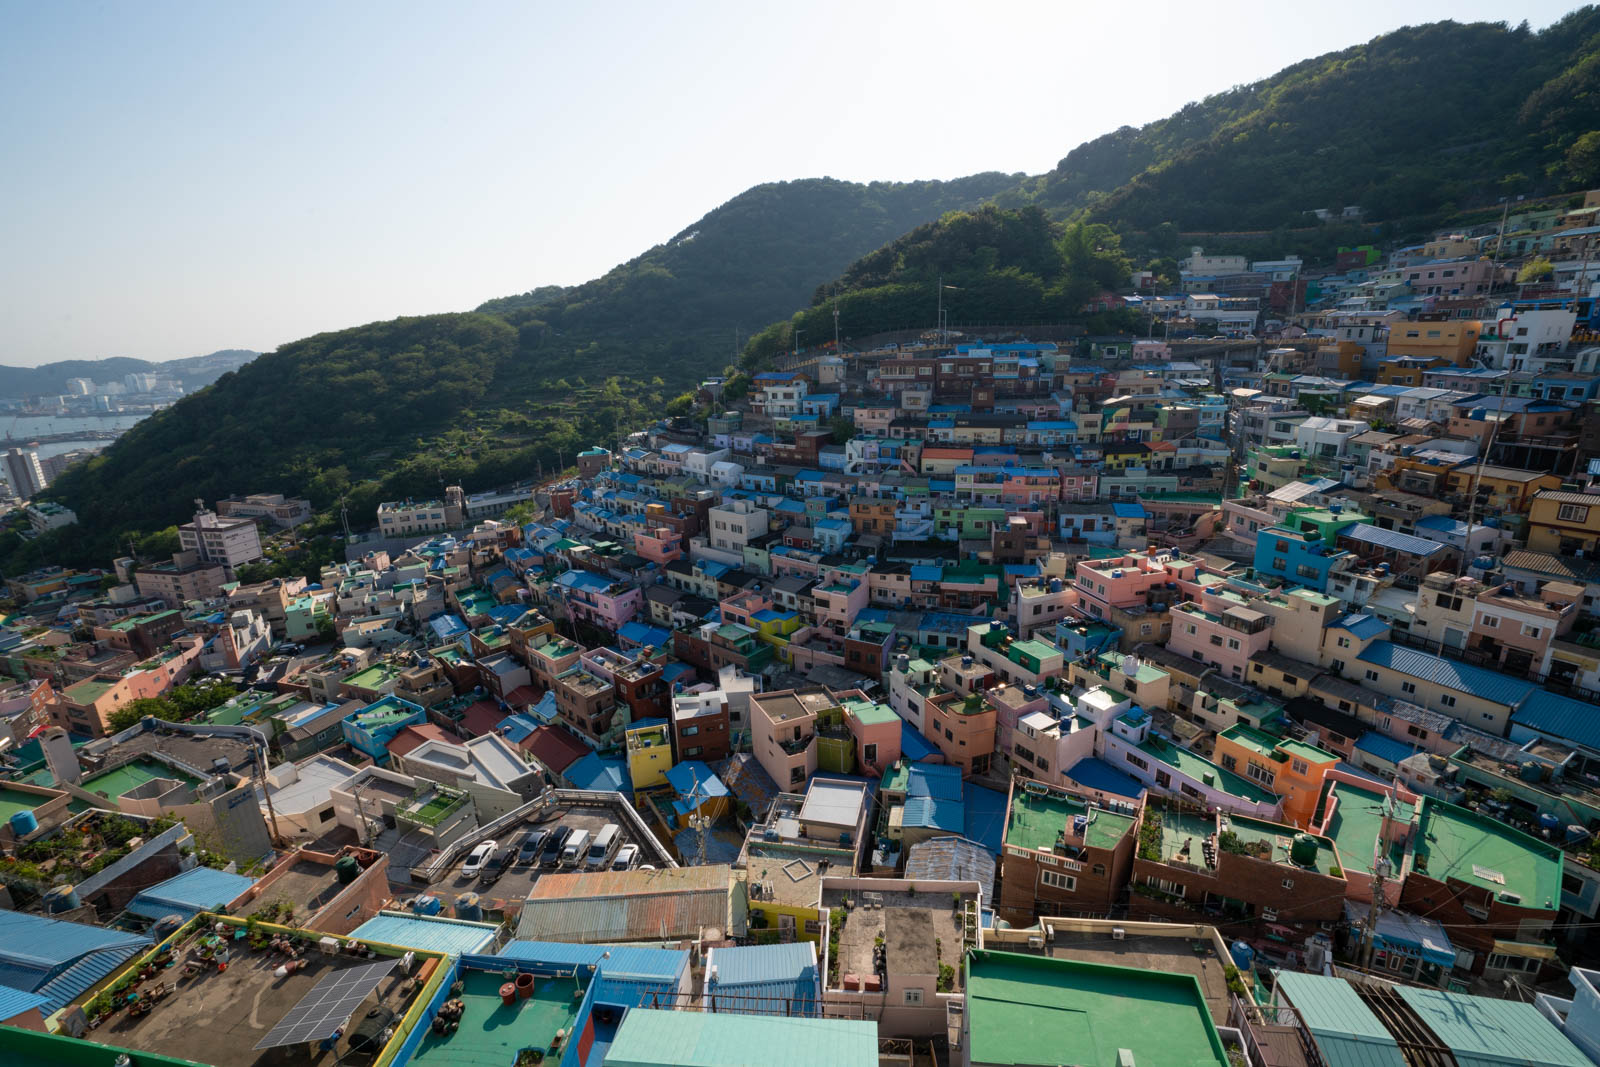 Gamcheon Culture Village, Busan, Korea